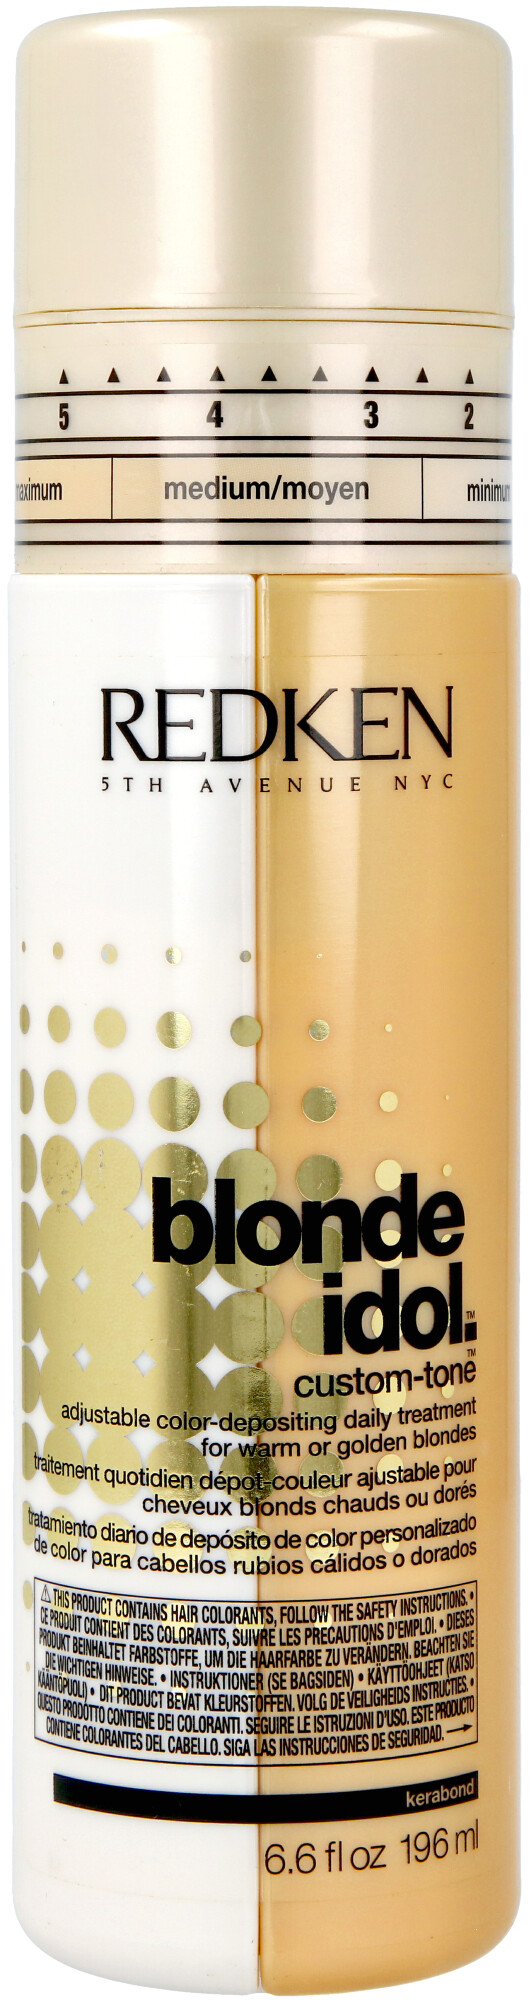 Redken Blonde Idol Custom-Tone Conditioner Gold